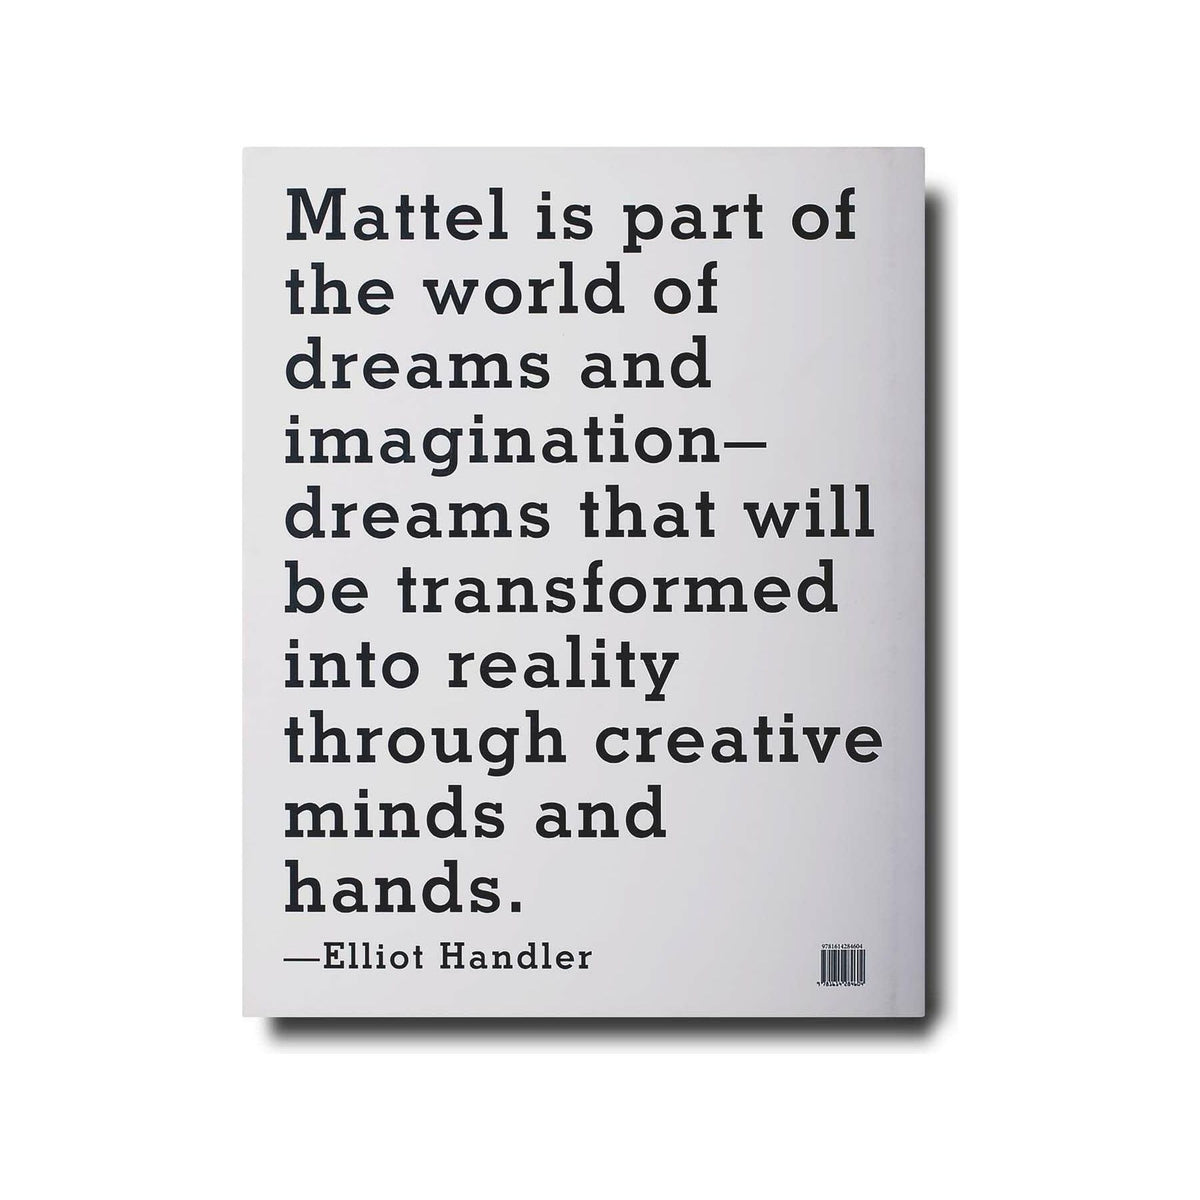 Mattel 70 Years Of Innovation And Play ASSOULINE JOHN JULIA.